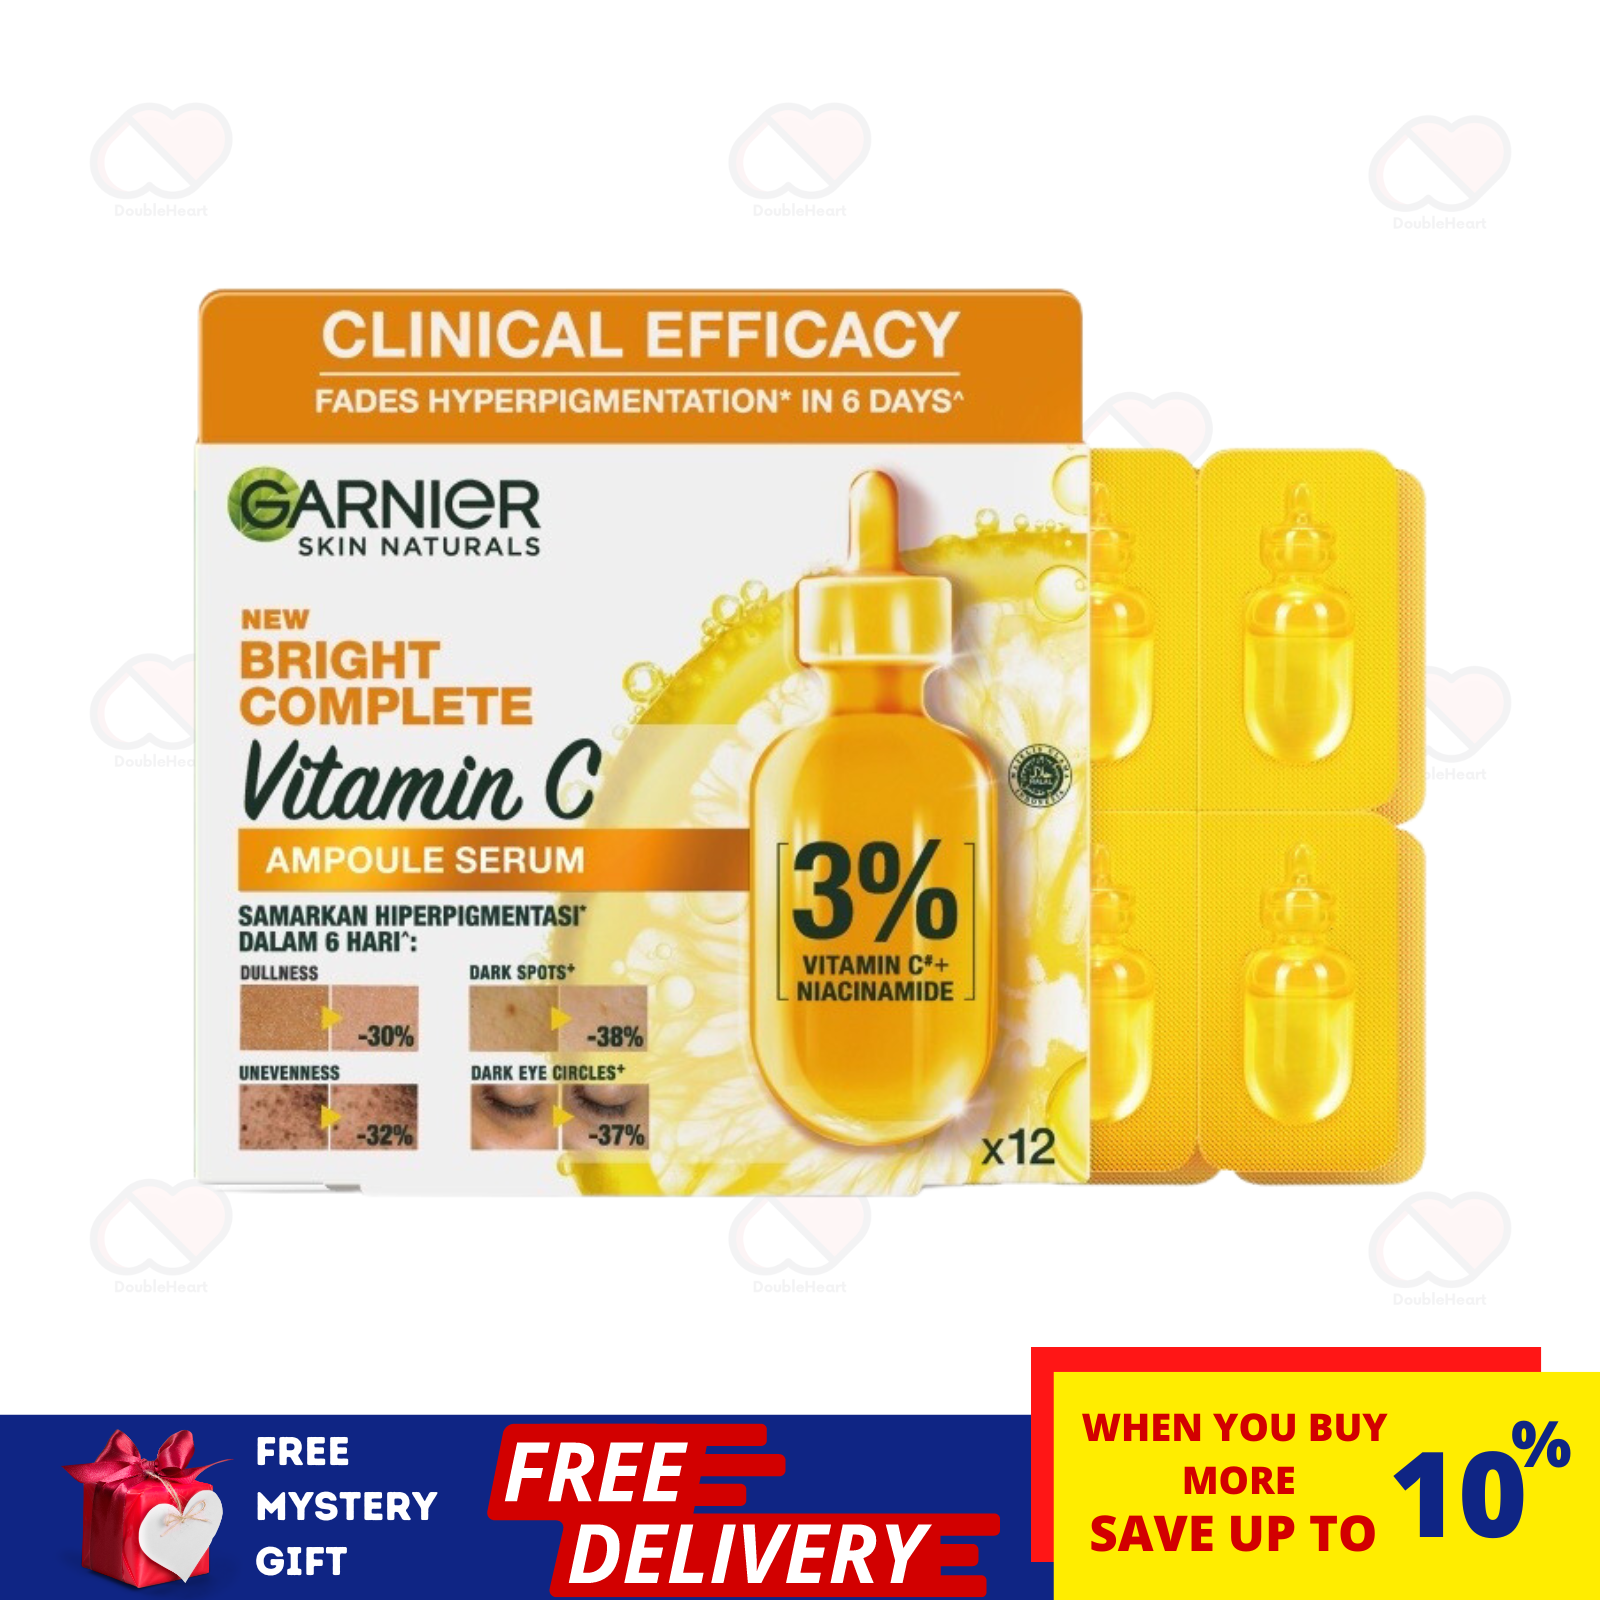 GARNIER 1.5ml x 12's Bright Complete Vitamin C Ampoule Serum (Clinical Efficacy) - $47.03